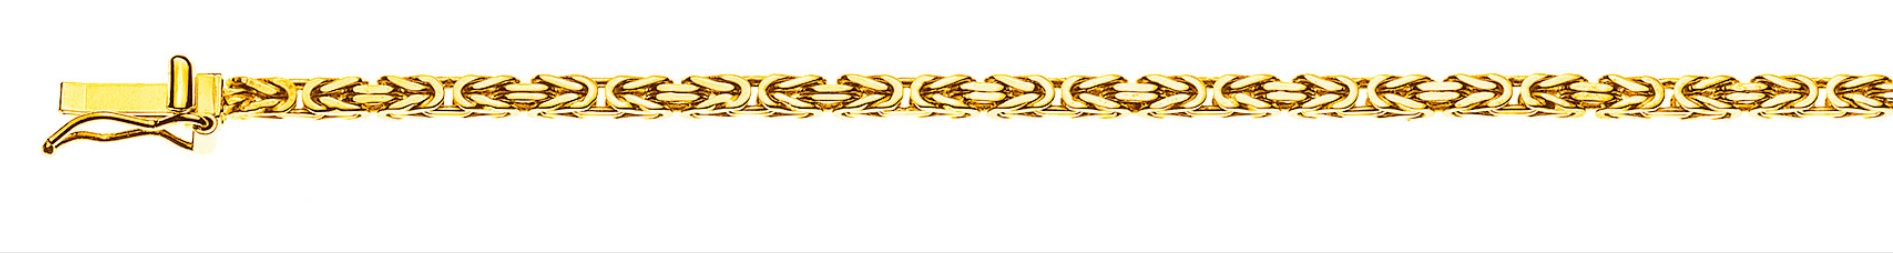 AURONOS Prestige Necklace Yellow Gold 18K King Chain 60cm 2mm